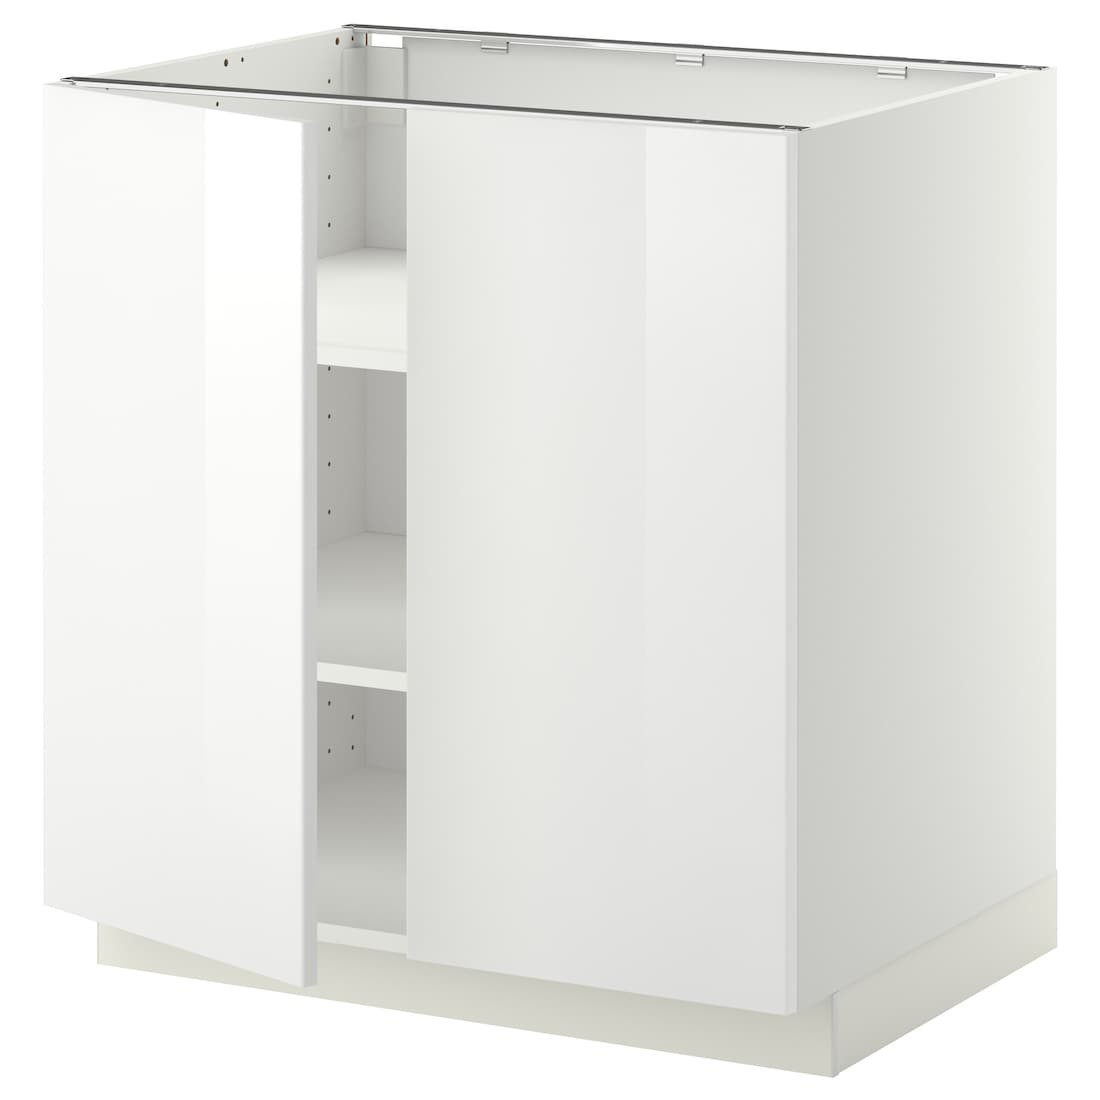 IKEA METOD МЕТОД Напол шкаф с полками / 2 двери, белый / Ringhult белый, 80x60 см 89458750 894.587.50